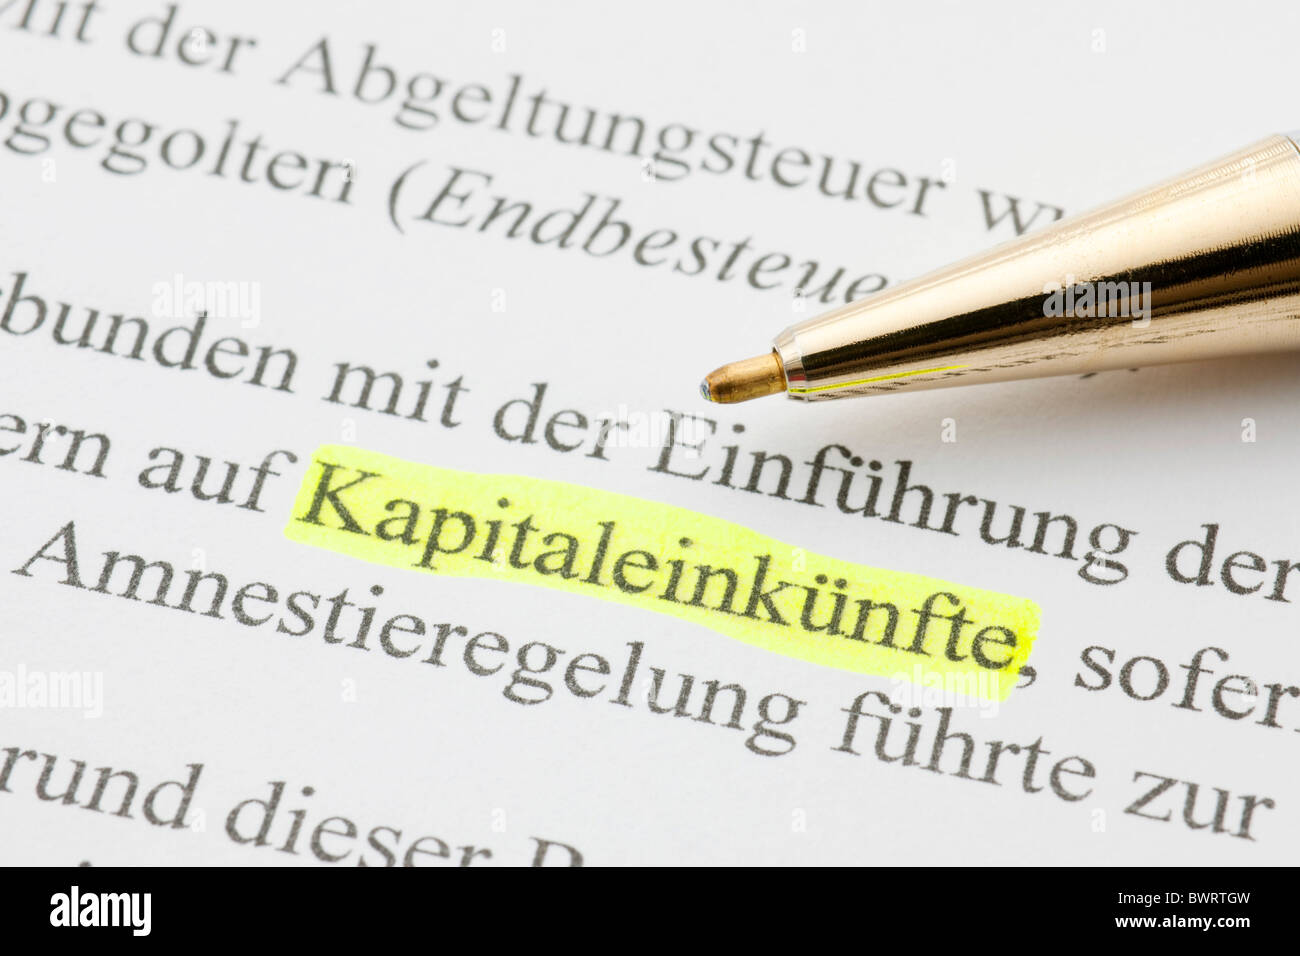 Kapitaleinkuenfte, German for Capital income Stock Photo